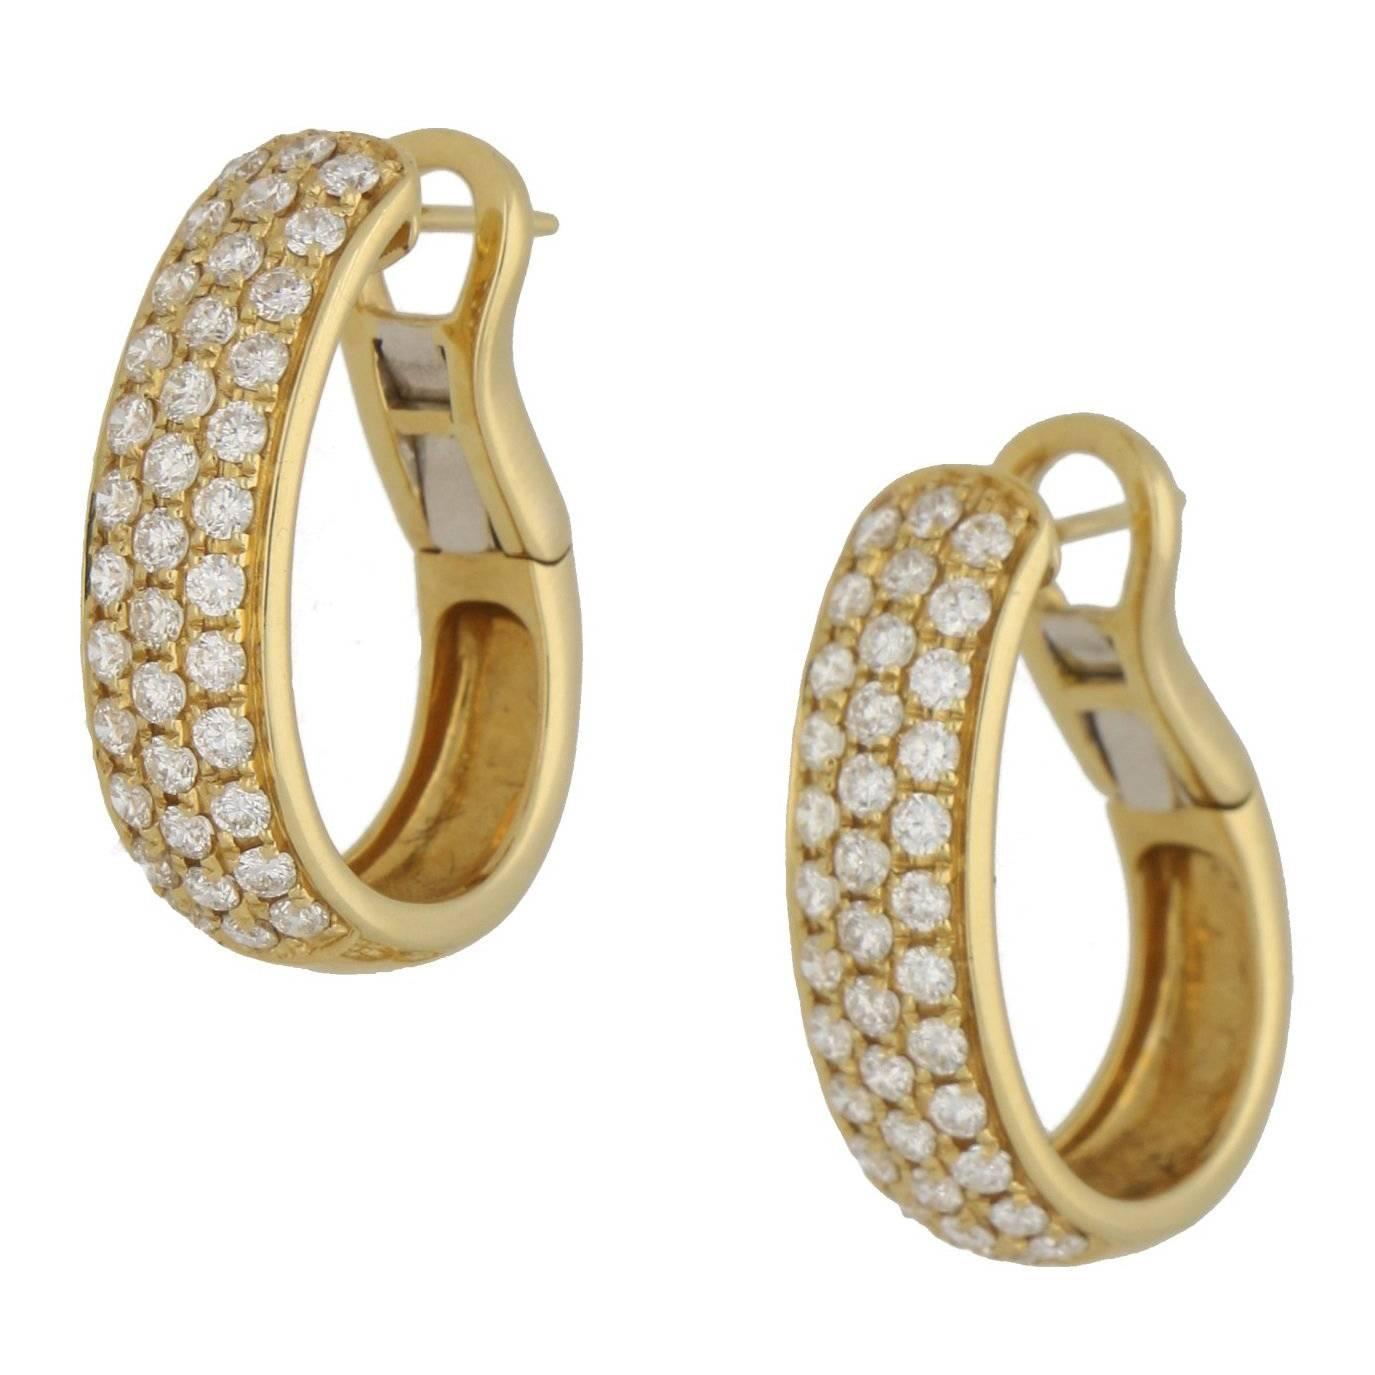 Triple Row Diamond Hoop Earrings in 18 Karat Gold 1.50cts